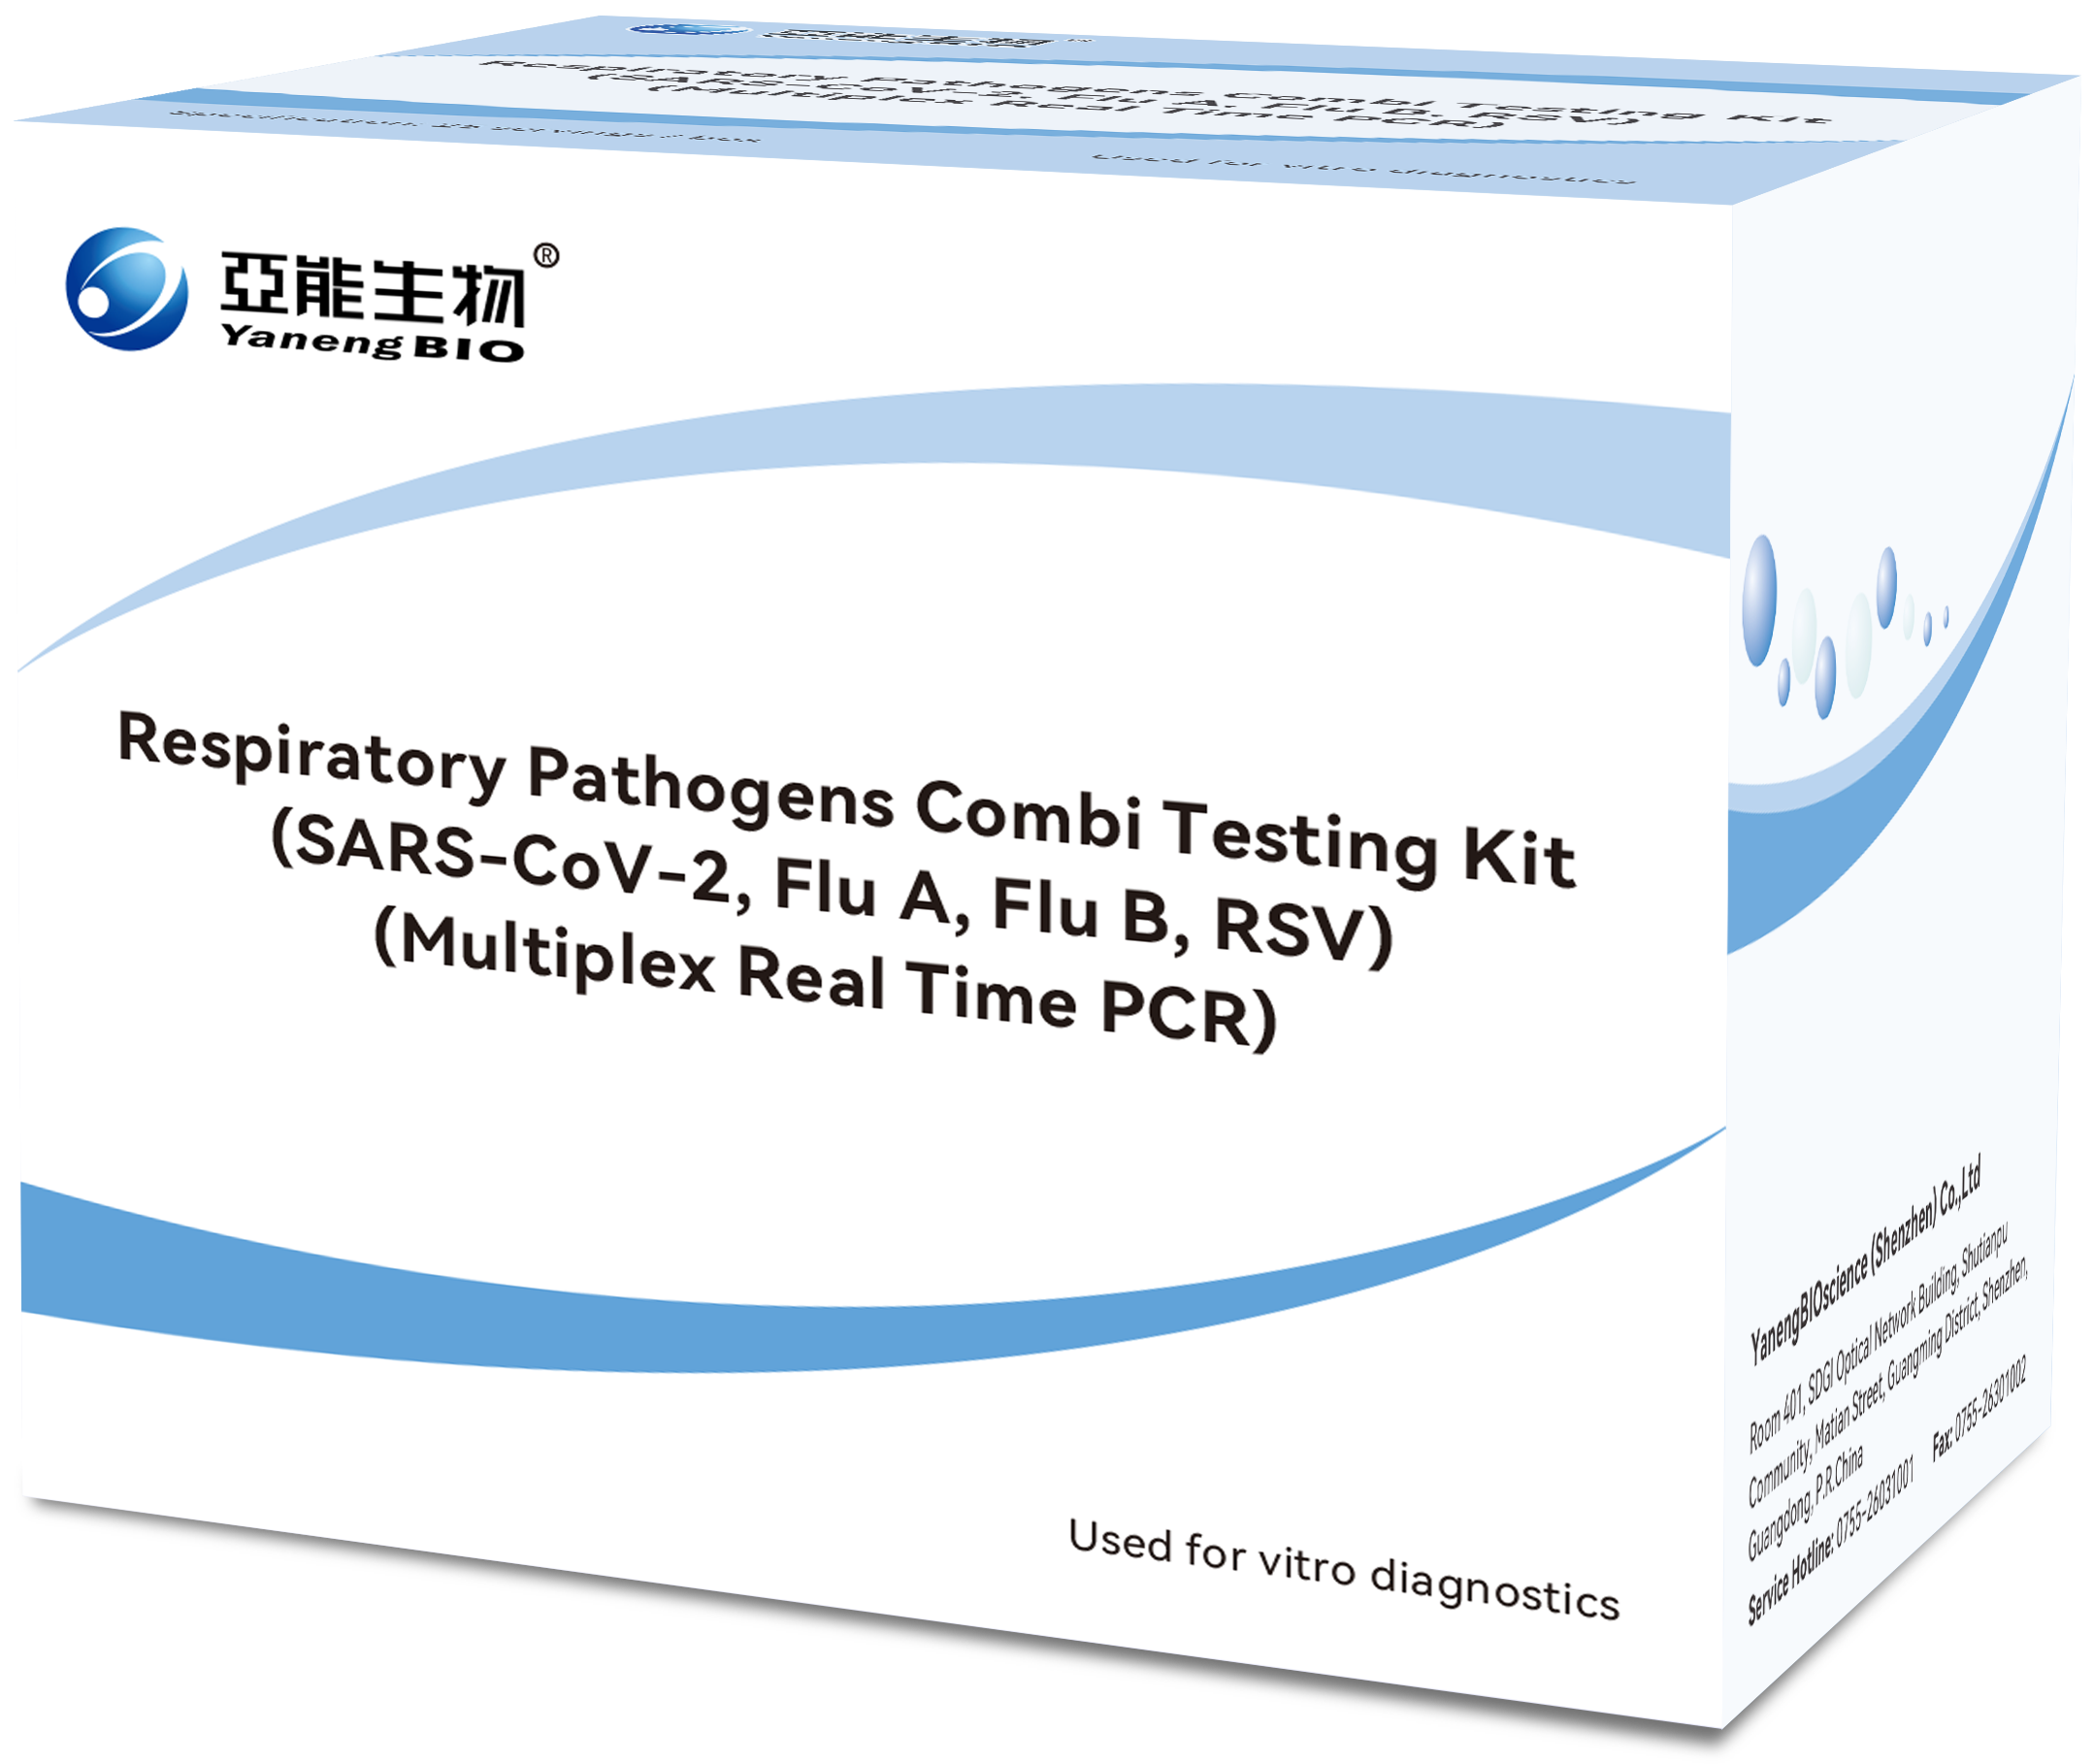 Respiratory Pathogens Combi Testing Kit -- RPC